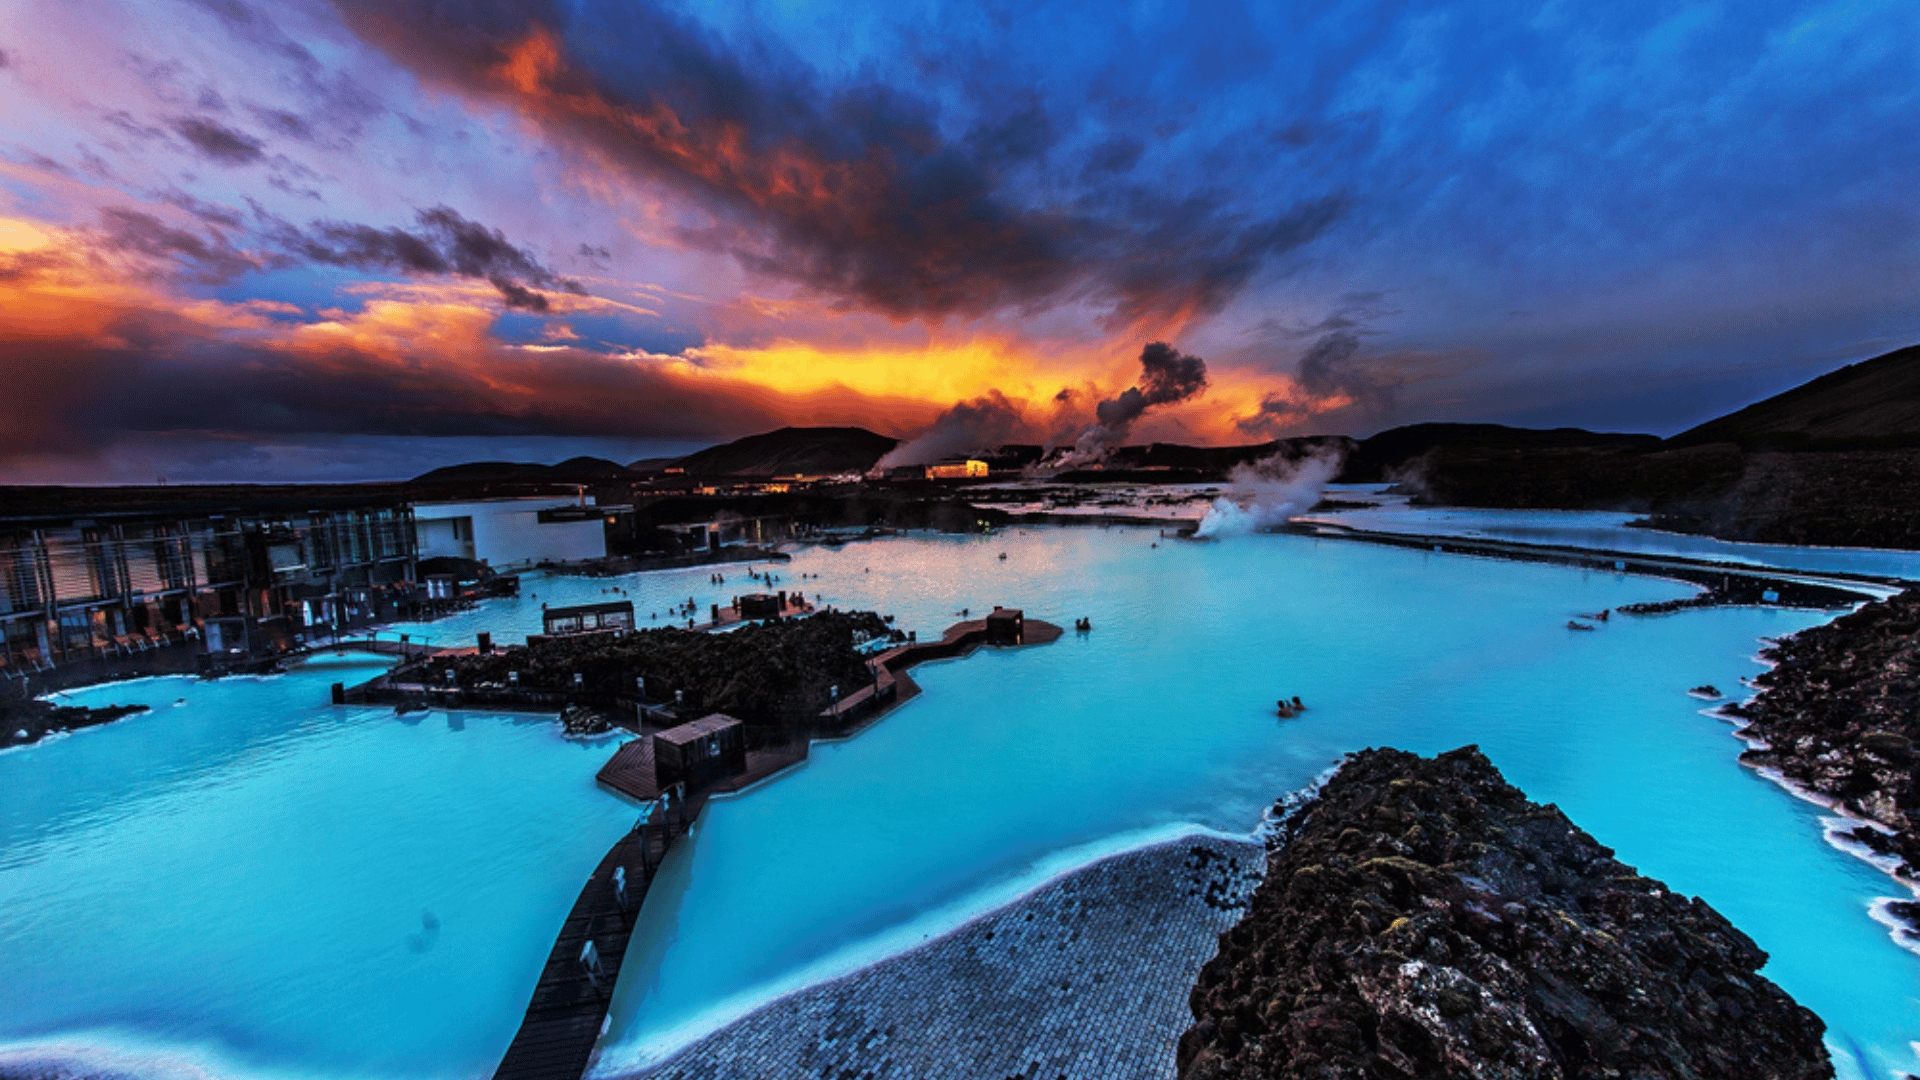 The Blue Lagoon, Iceland sunset